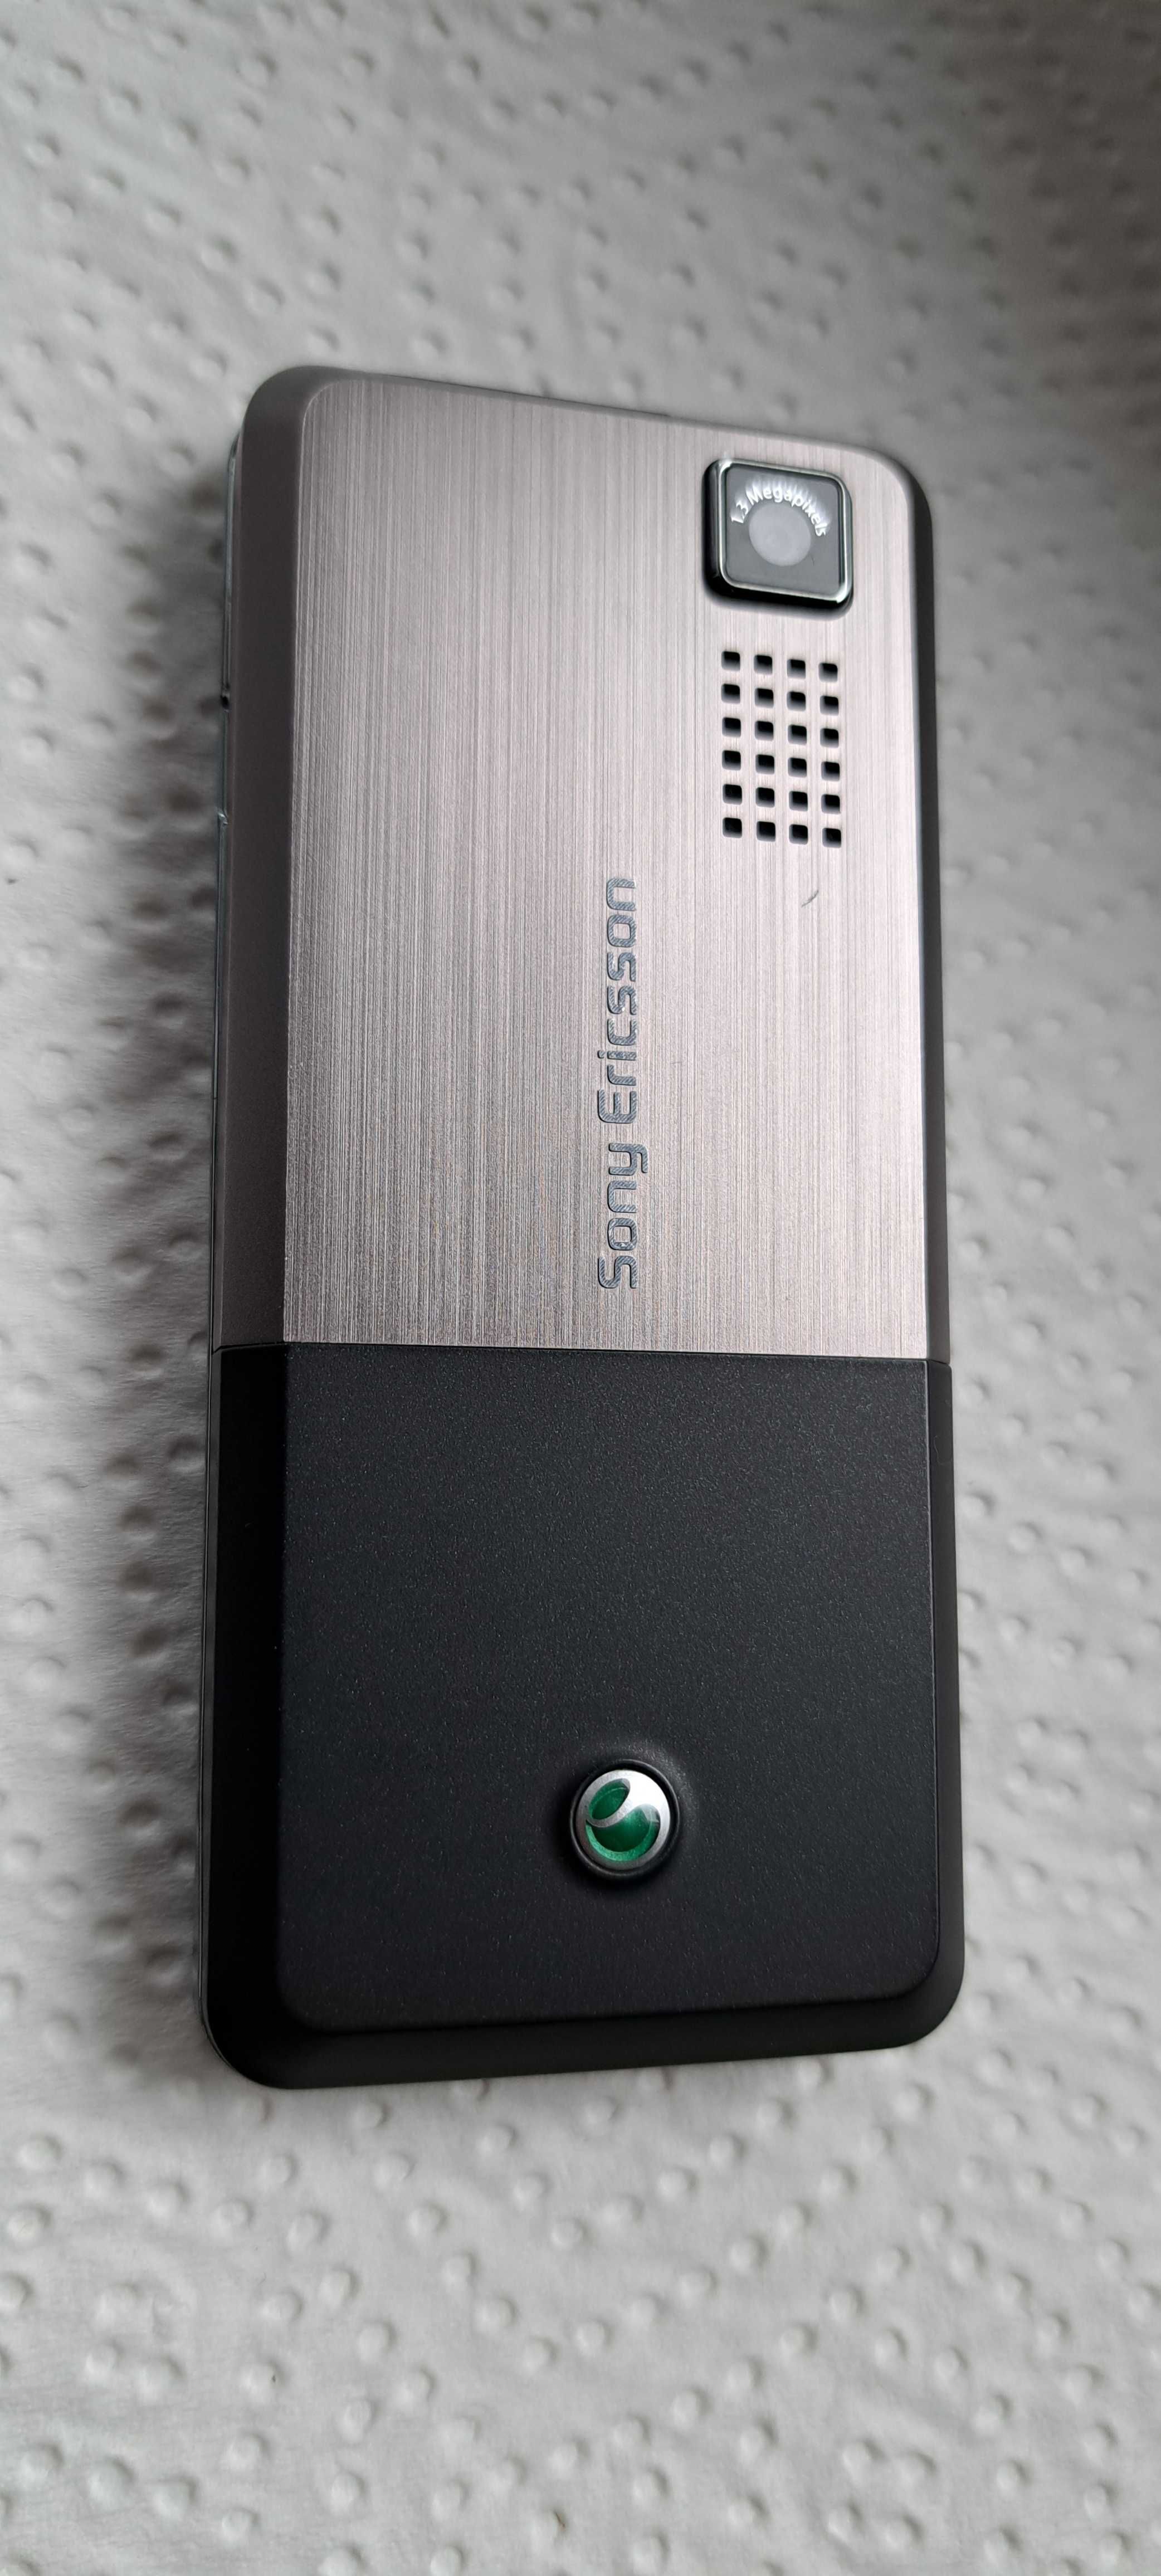 Sony Ericsson T280 (Stan Idealny)